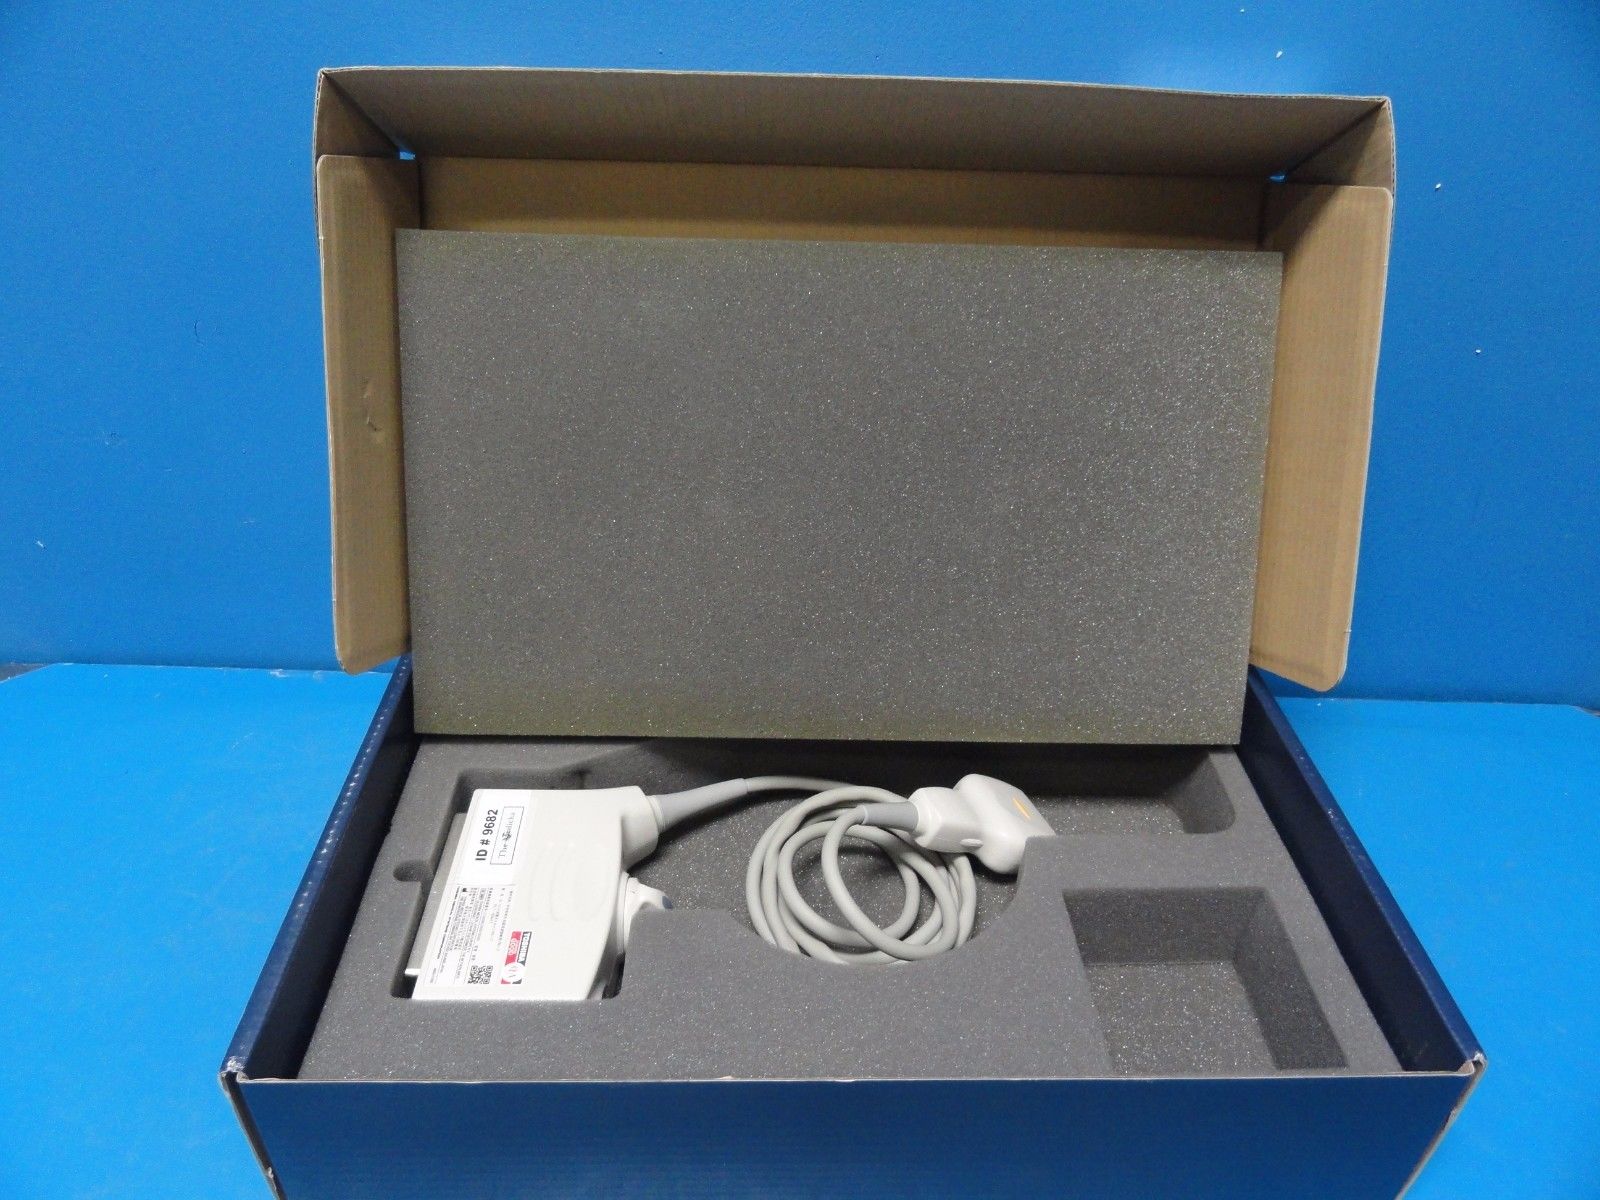 Toshiba PLT-604AT Linear Array Ultrasound Probe for Aplio & Xario Series (9682) DIAGNOSTIC ULTRASOUND MACHINES FOR SALE